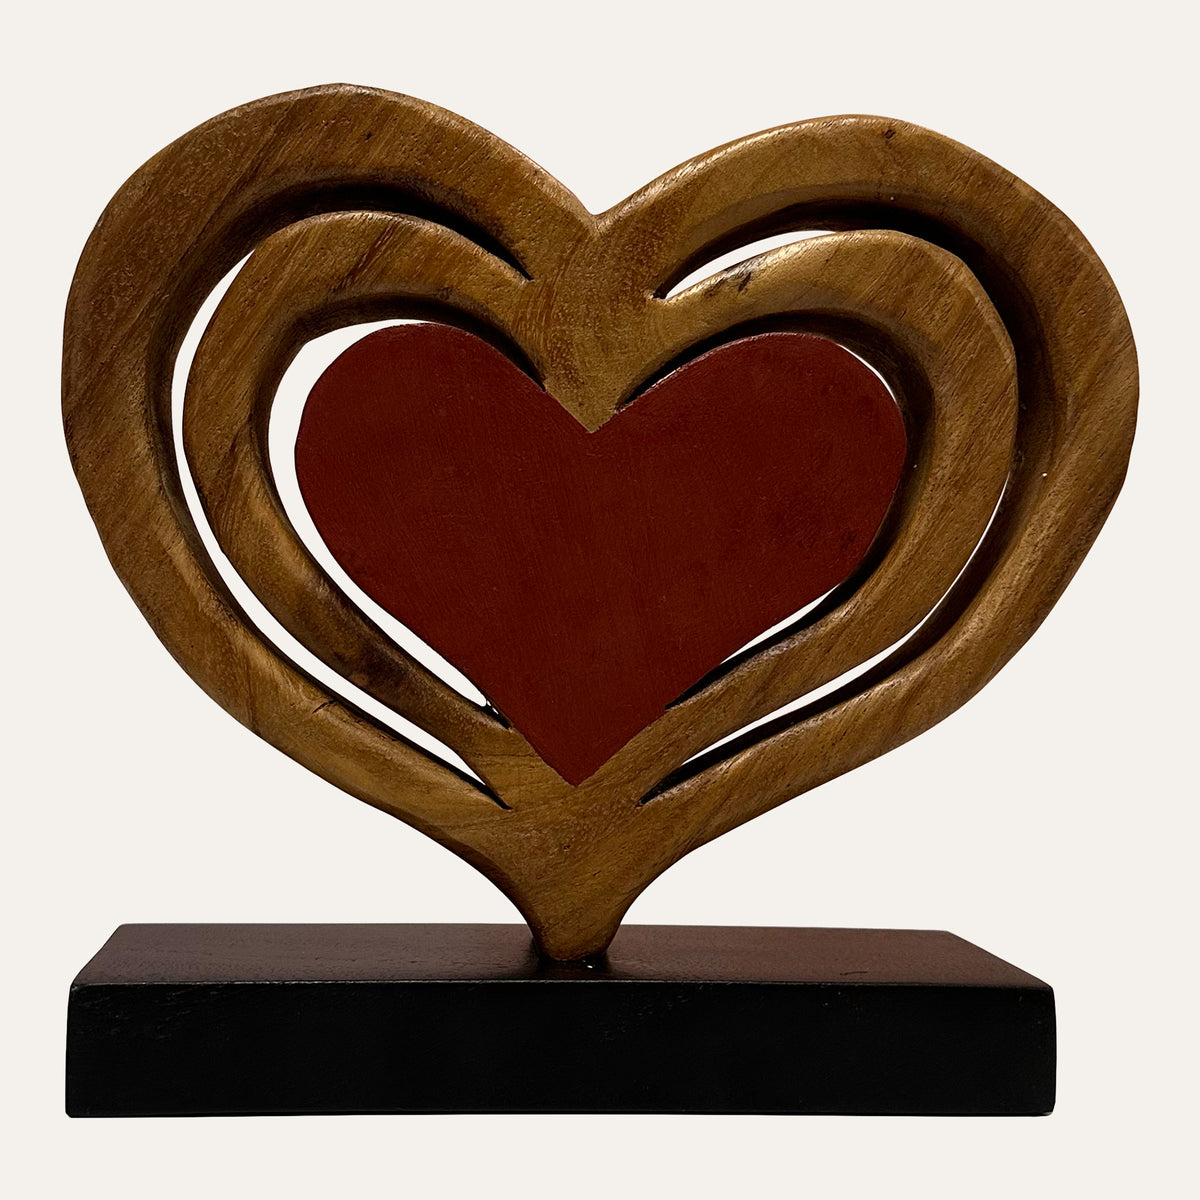 Decozen Home Decor Handmade Wooden Sculpture in Hearts Shape